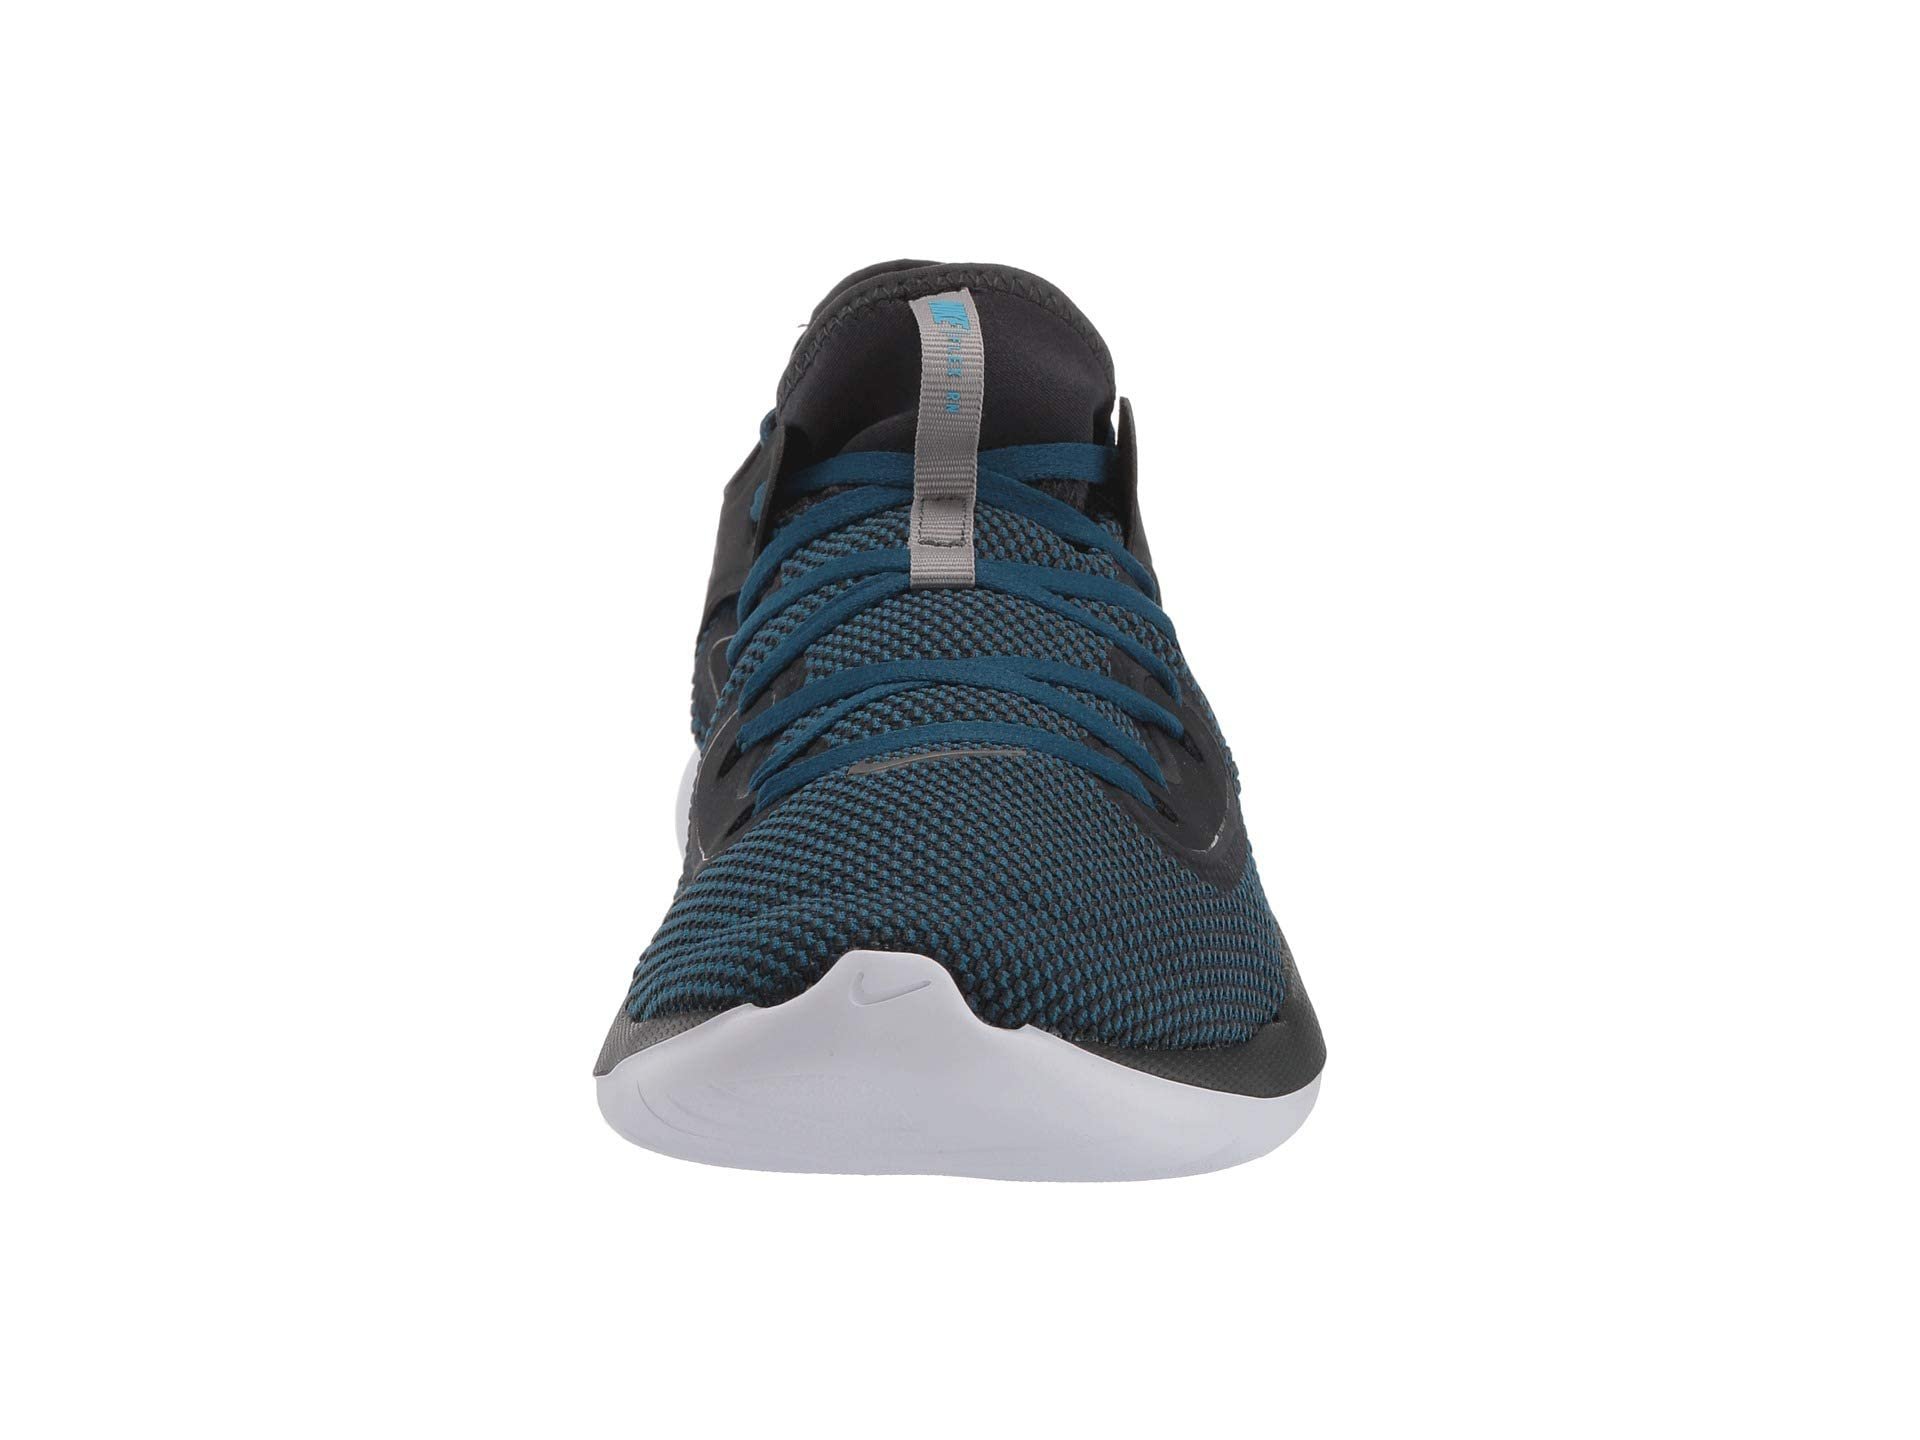 Nike Men's Flex 2019 RN Running Shoes - image 4 of 7